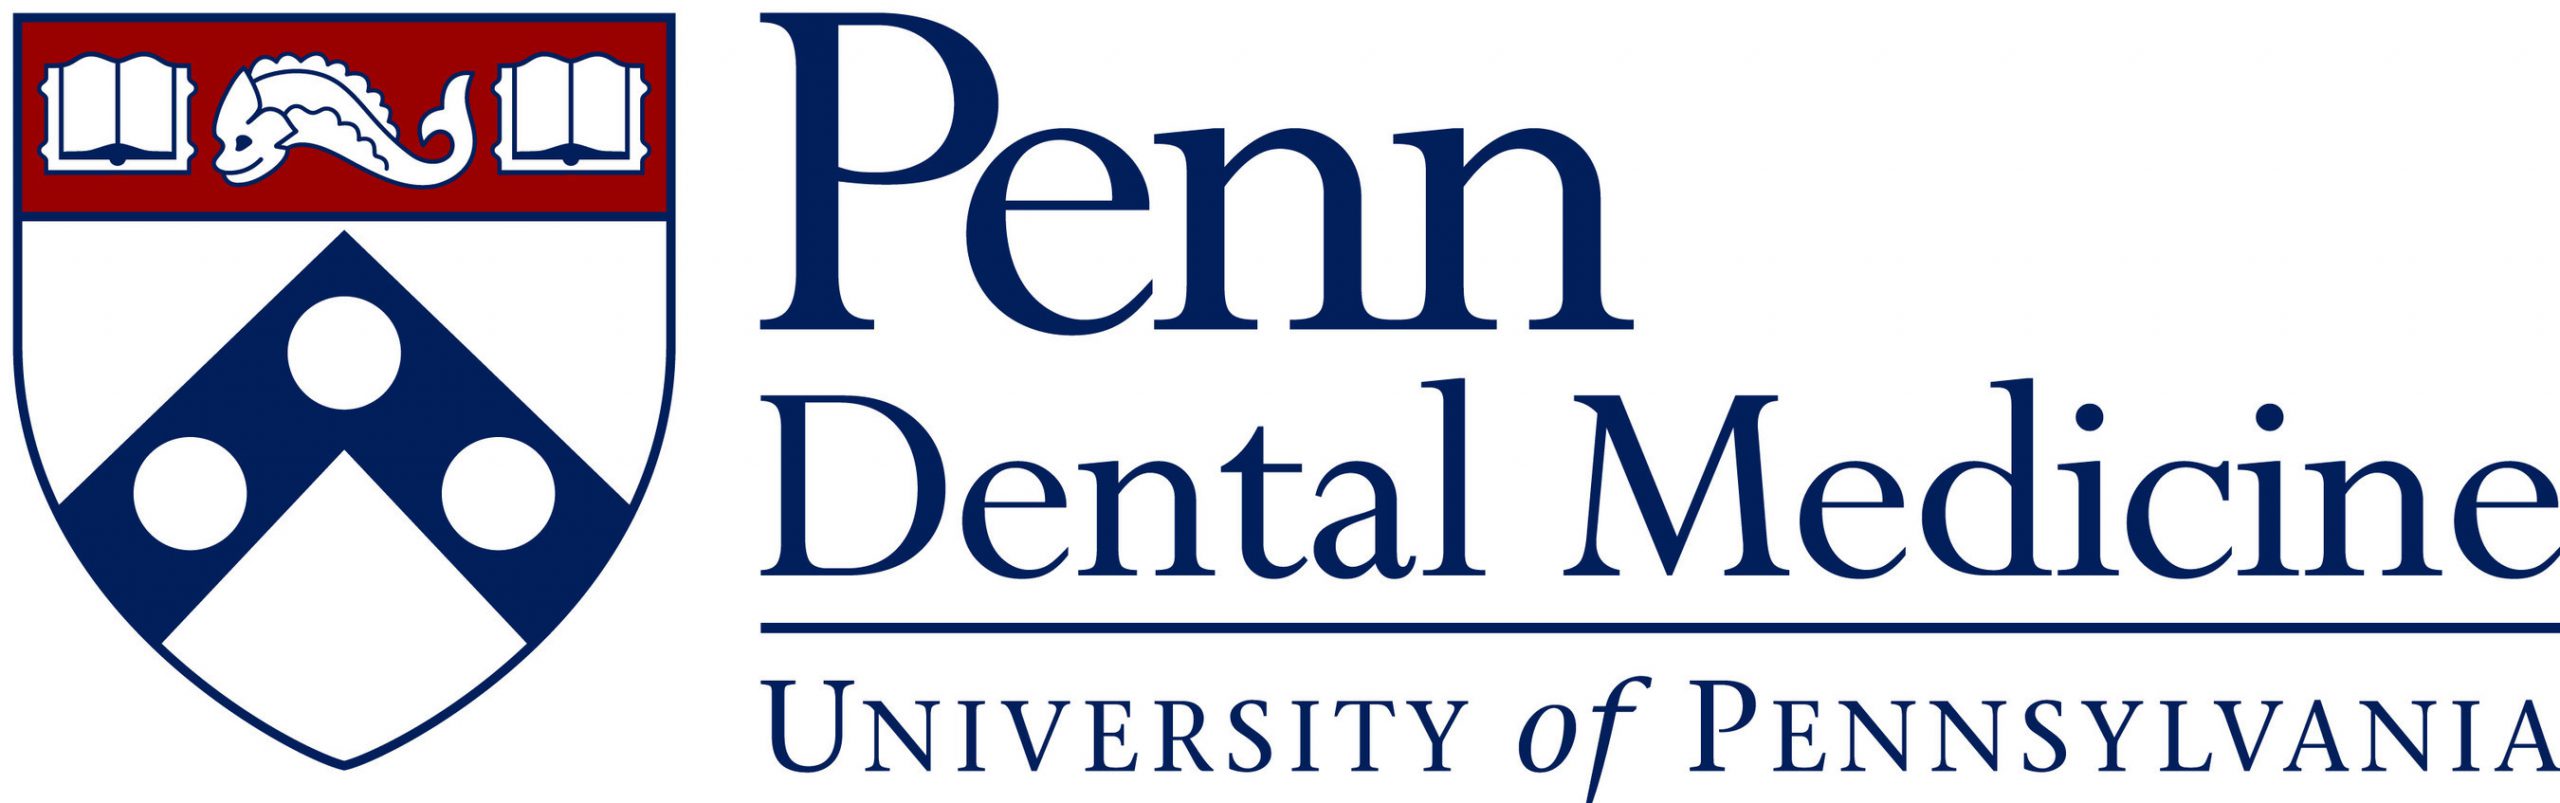 penn dental medicine